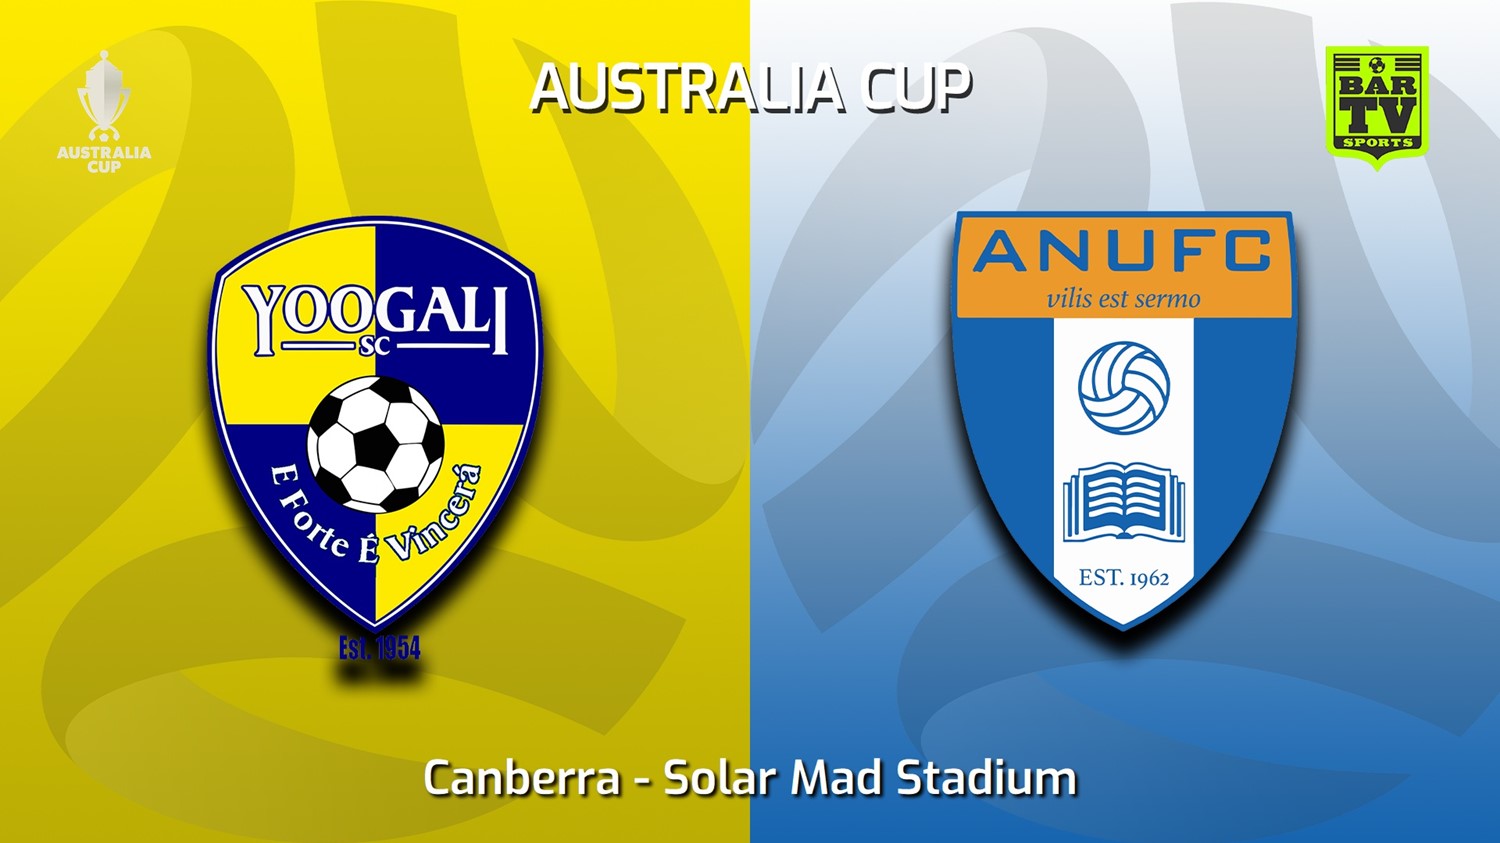 230318-Australia Cup Qualifying Canberra Yoogali SC v ANU FC Minigame Slate Image